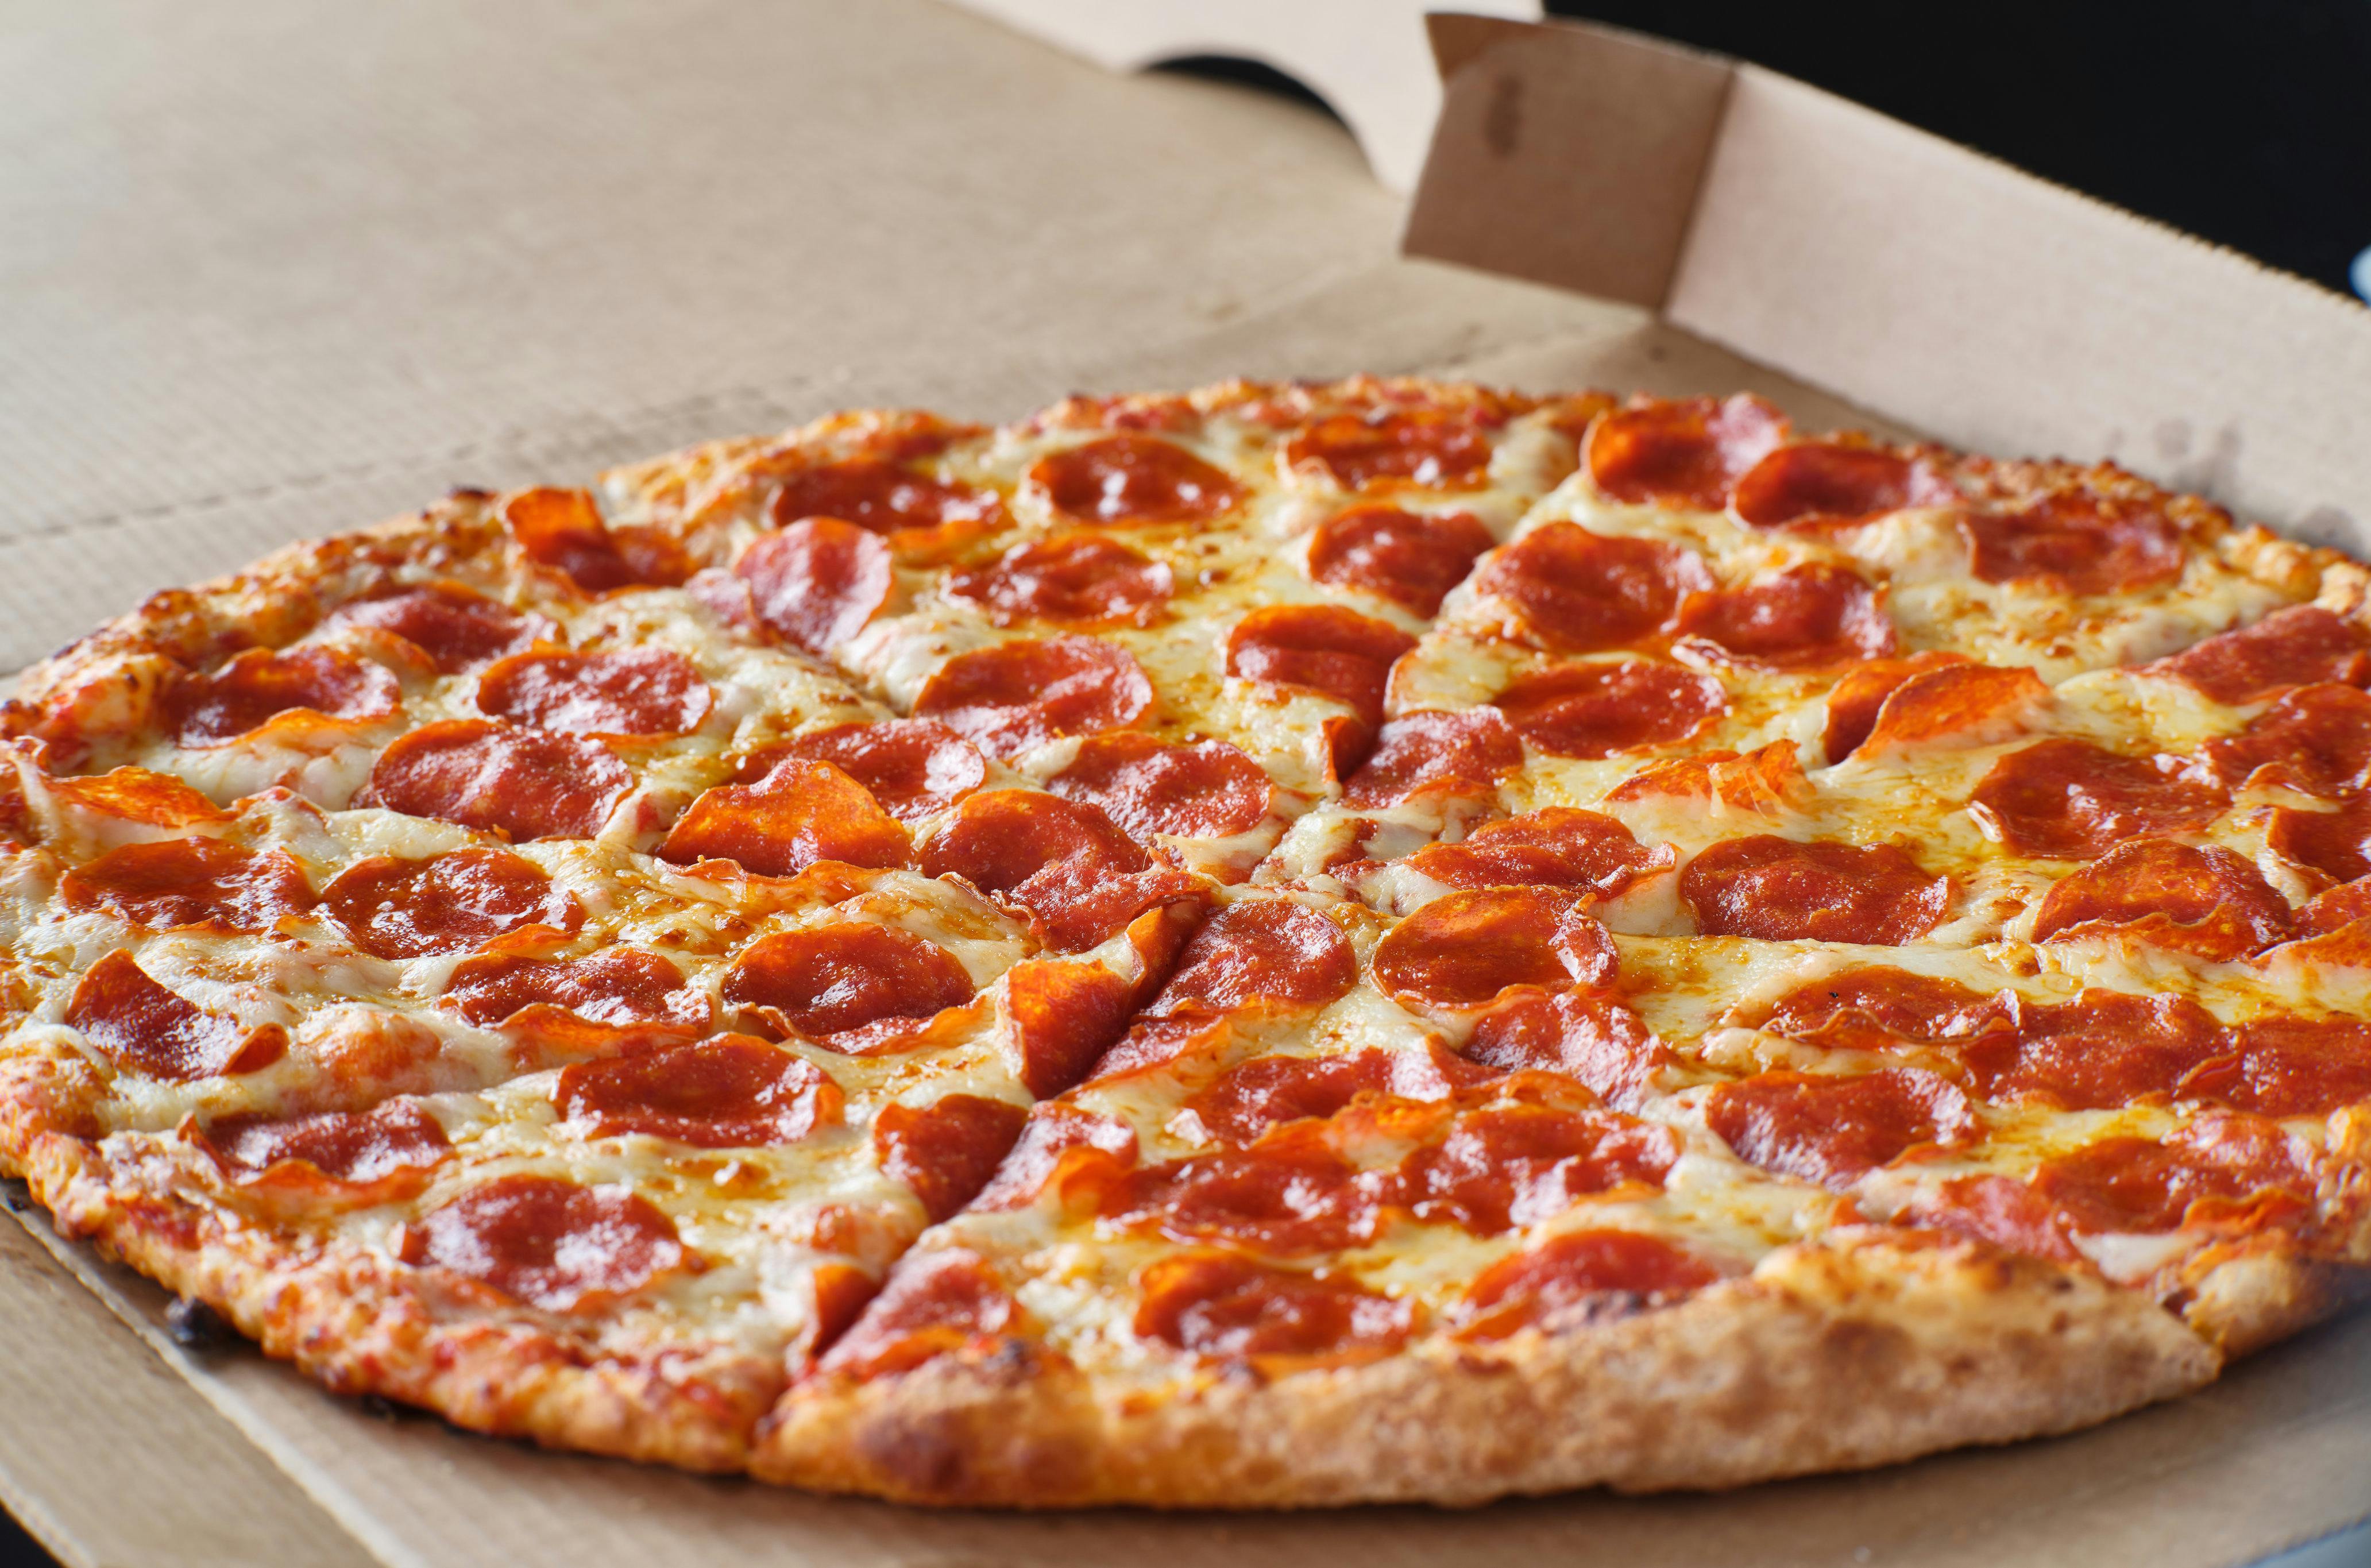 Lovecchio's Pizza  - Landover Rd in Philadelphia - Highlight